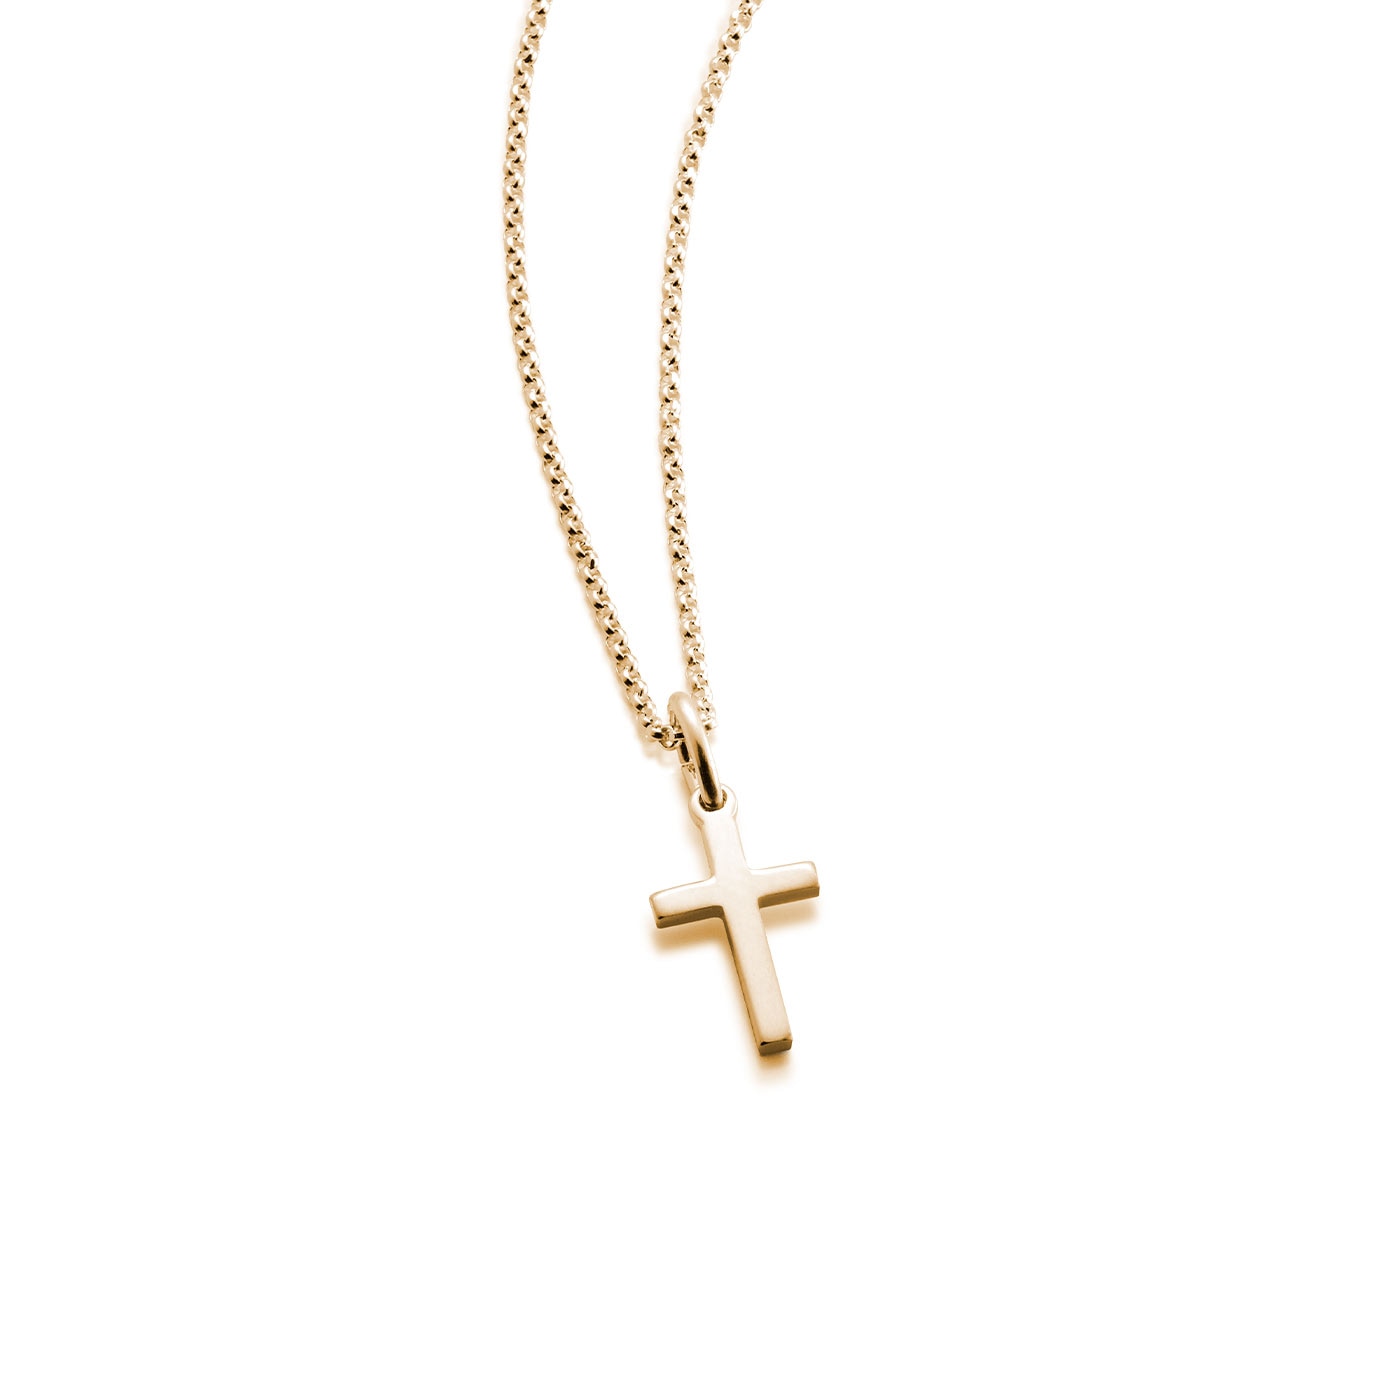 Miniature Faith necklace Gold plated